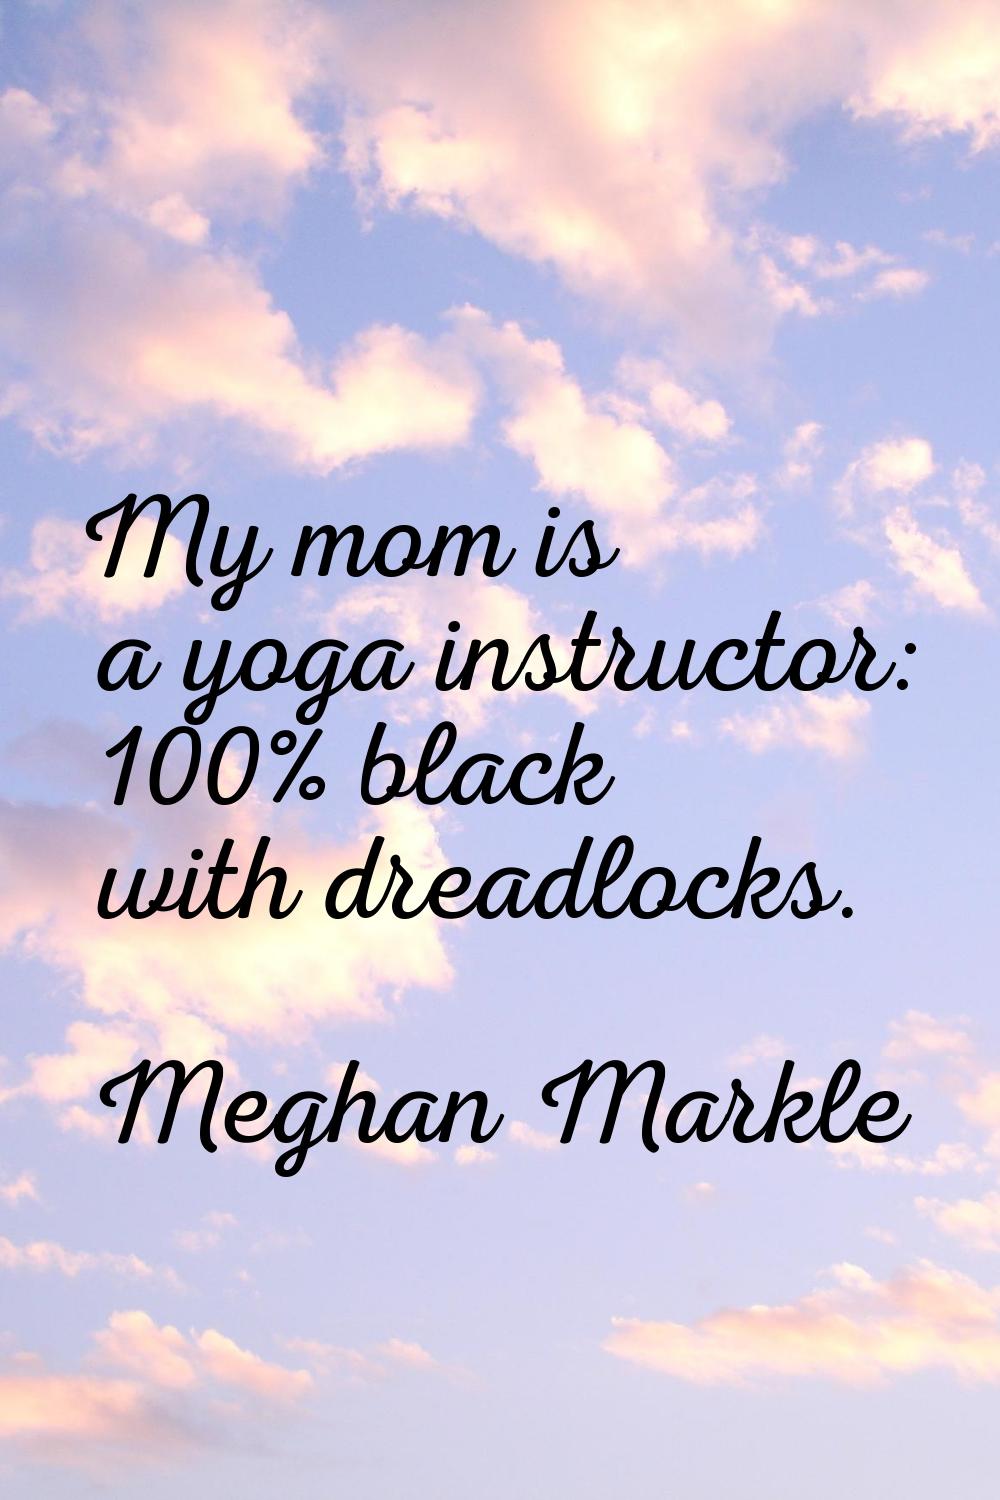 My mom is a yoga instructor: 100% black with dreadlocks.